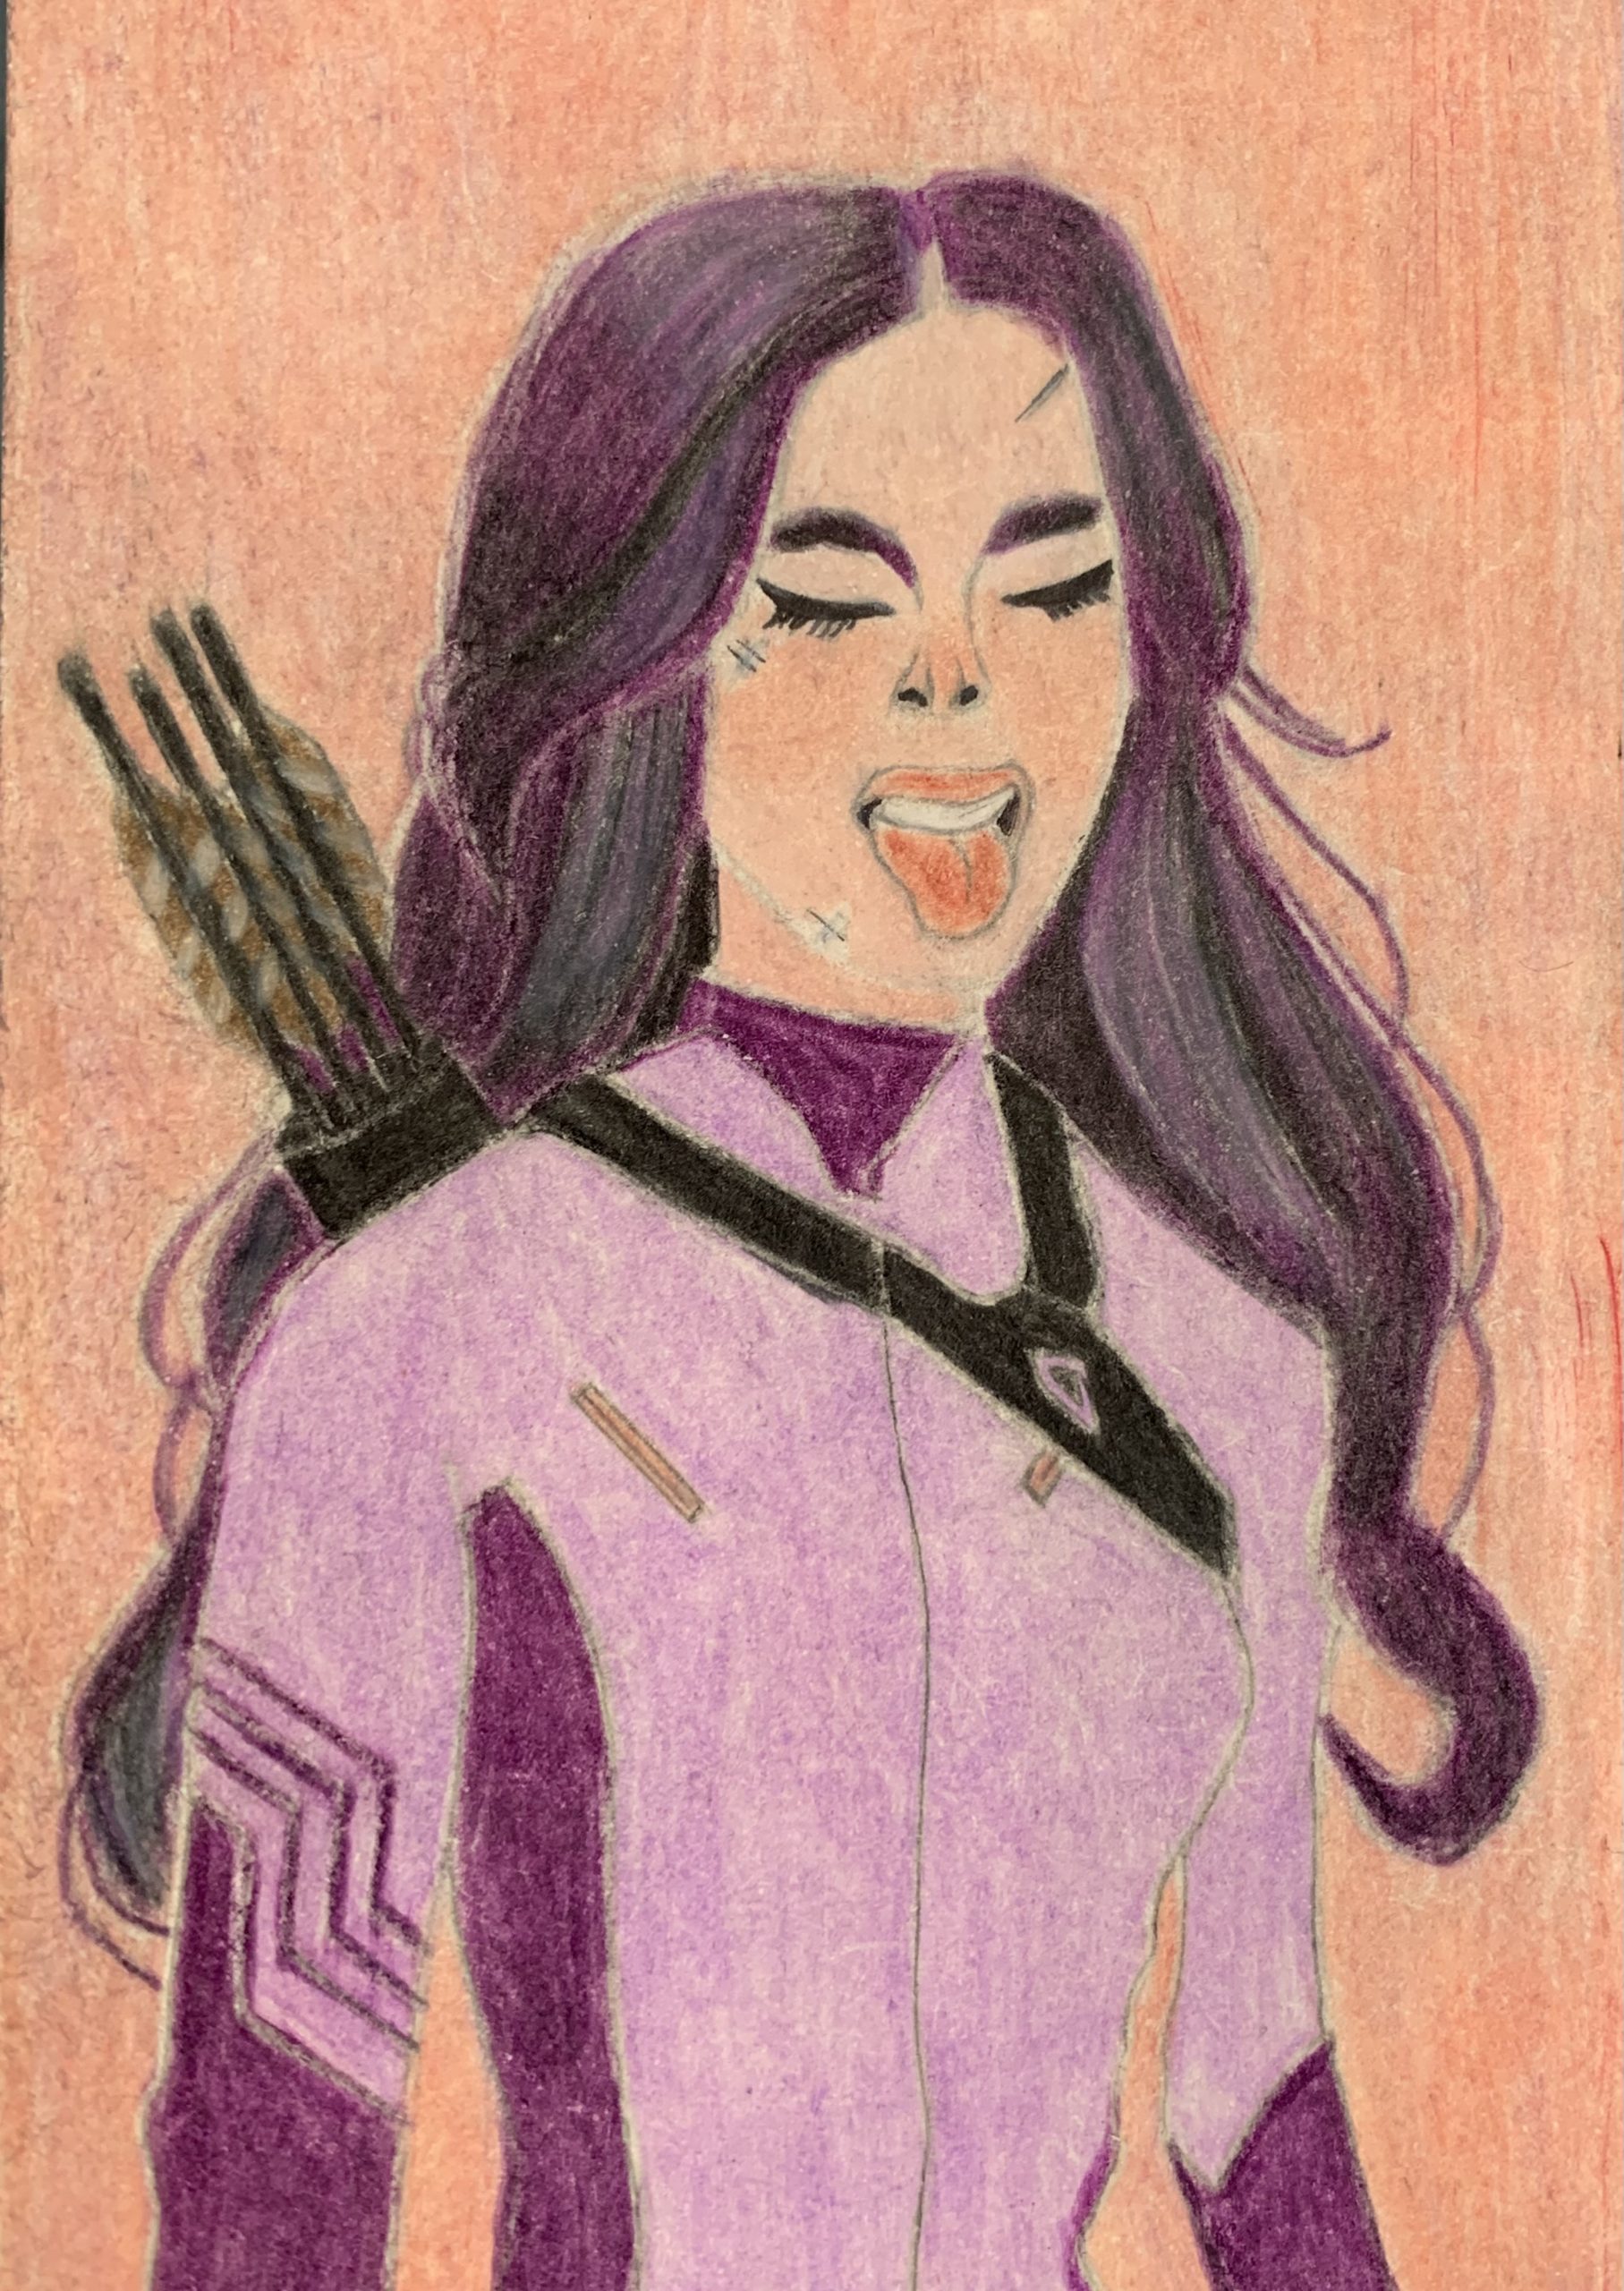 Hawkeye (Kate Bishop) Anime Drawing